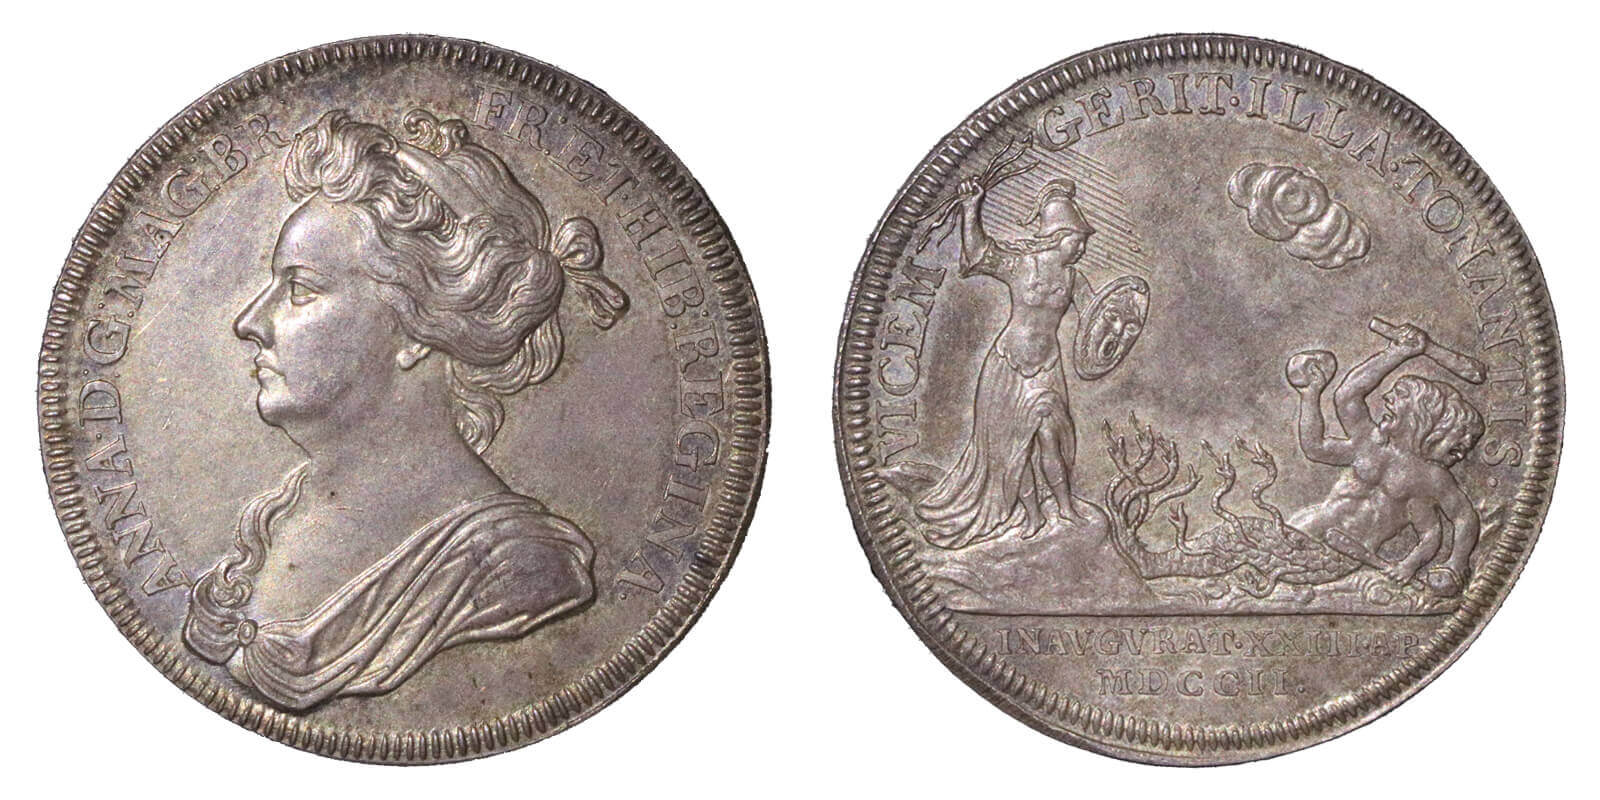 Anne coronation medal.jpg